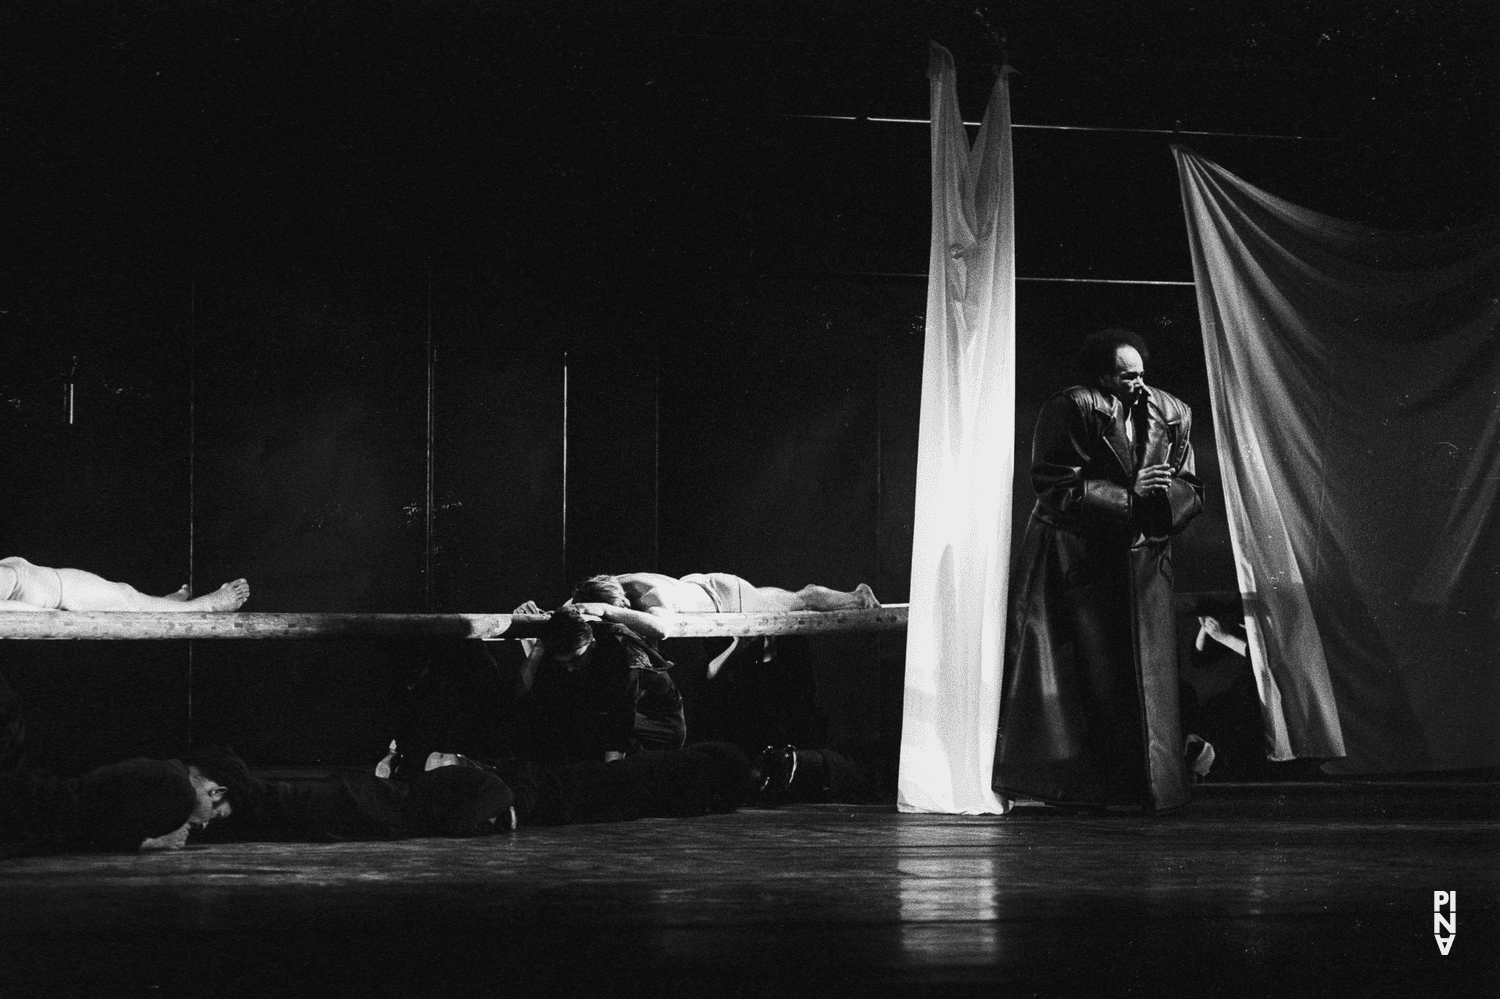 Carlos Orta in “Iphigenie auf Tauris” by Pina Bausch at Opernhaus Wuppertal, April 20, 1974